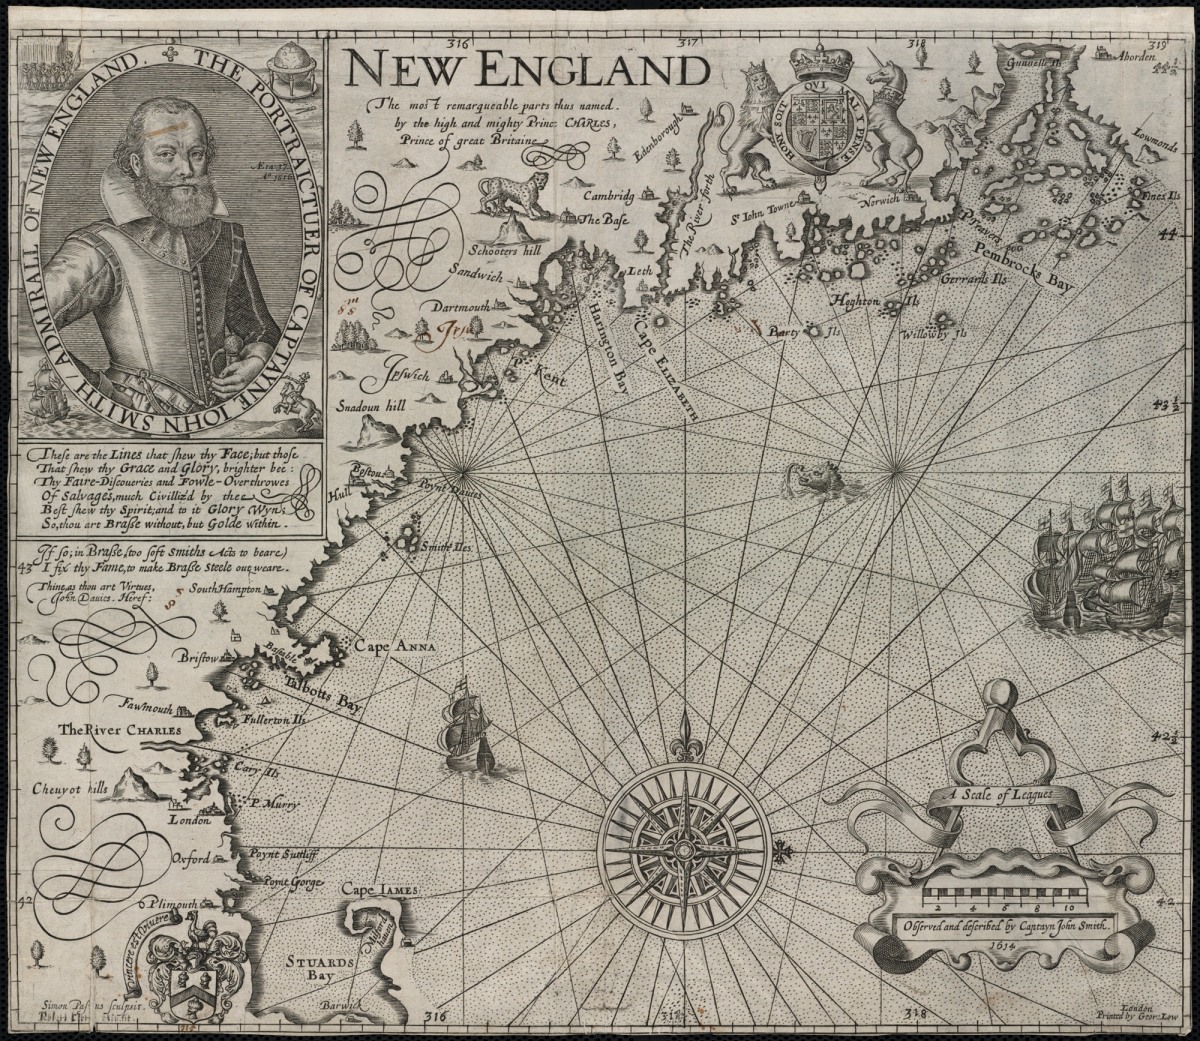 Precolonial North American History: Captain John Smith maps New England